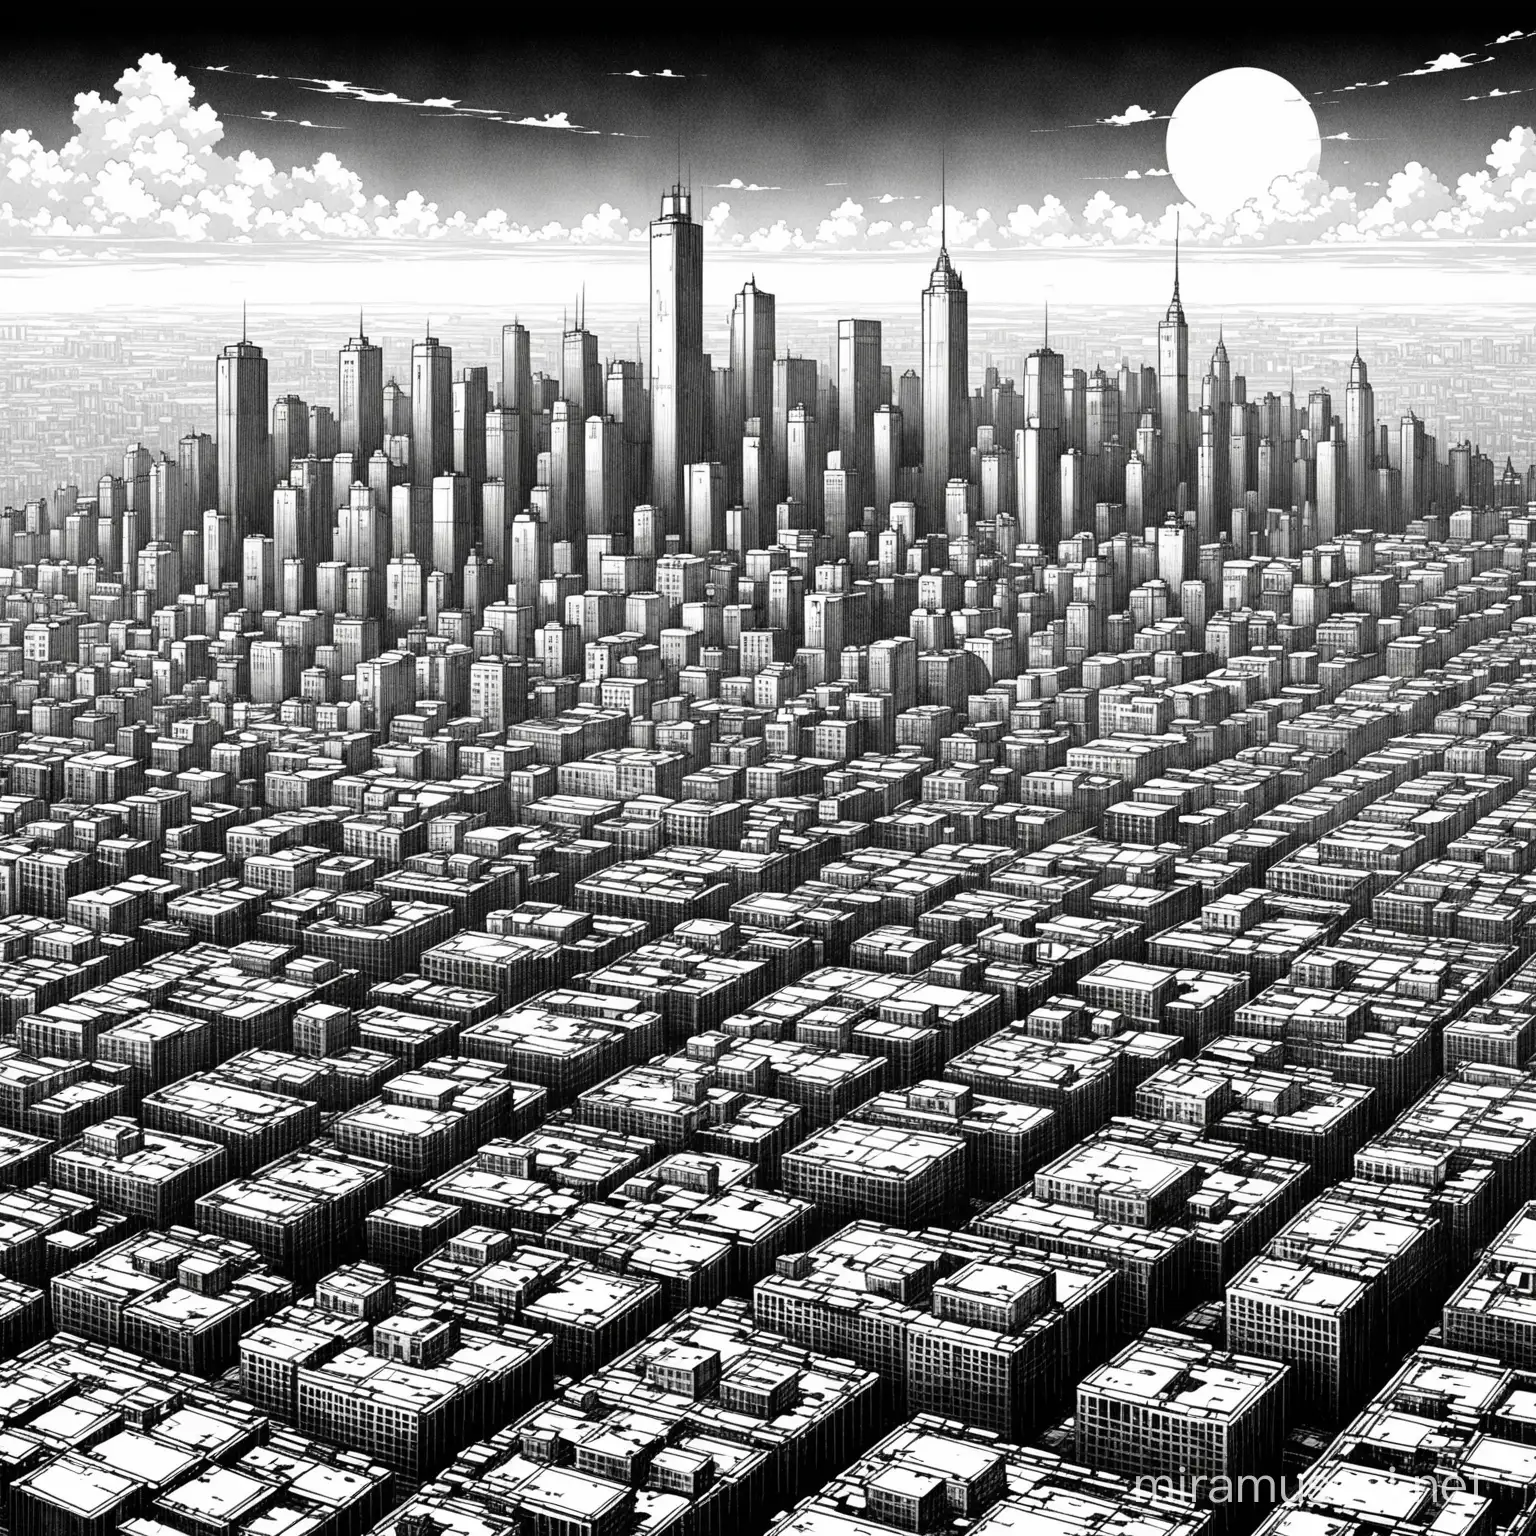 Monochrome Urban Landscape Sterile City Skyline in Black and White